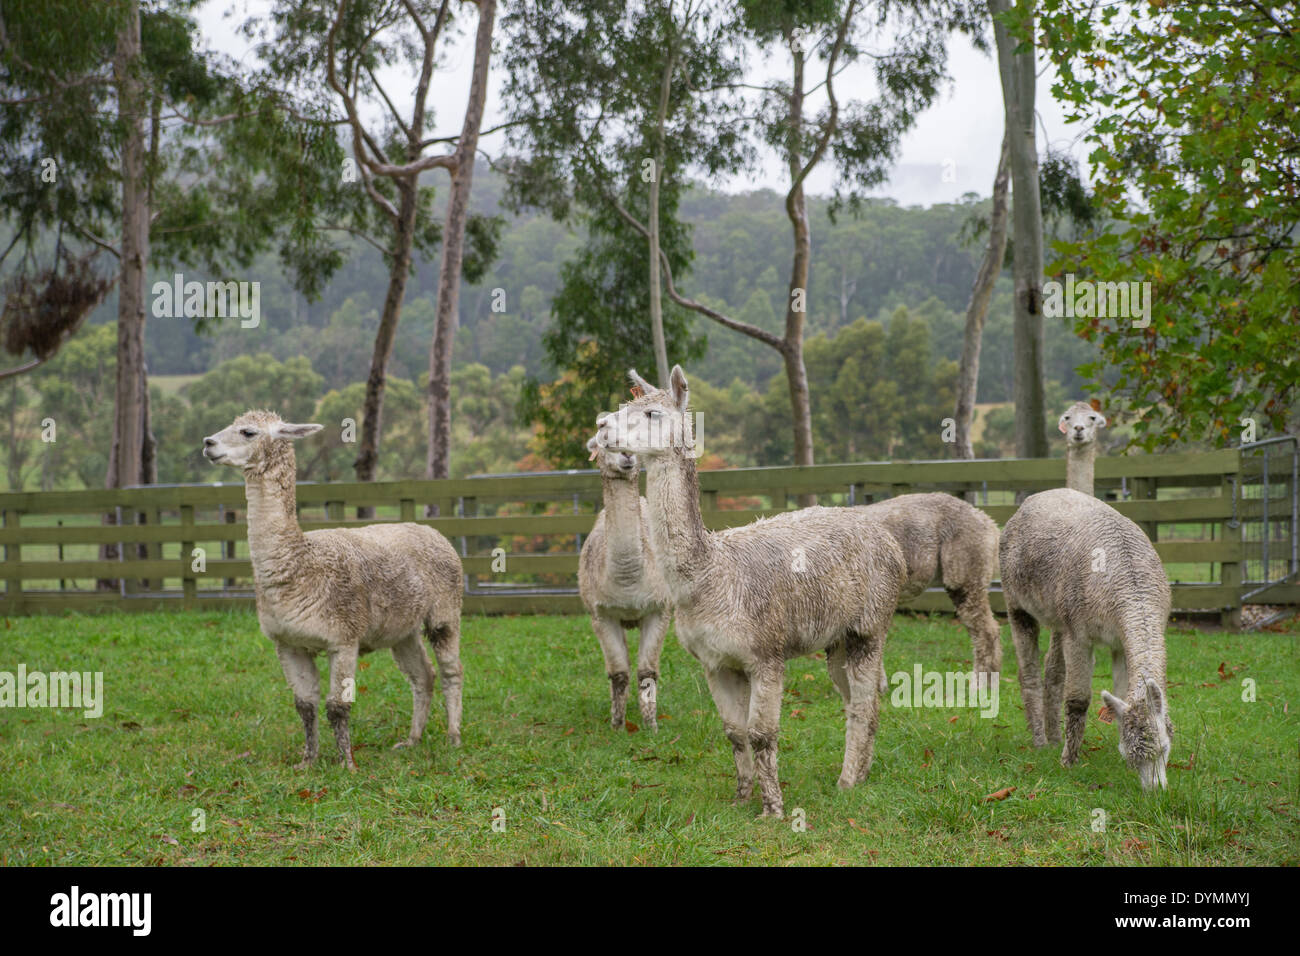 Shaved alpacas at Healesville, Victoria, Australia Stock Photo